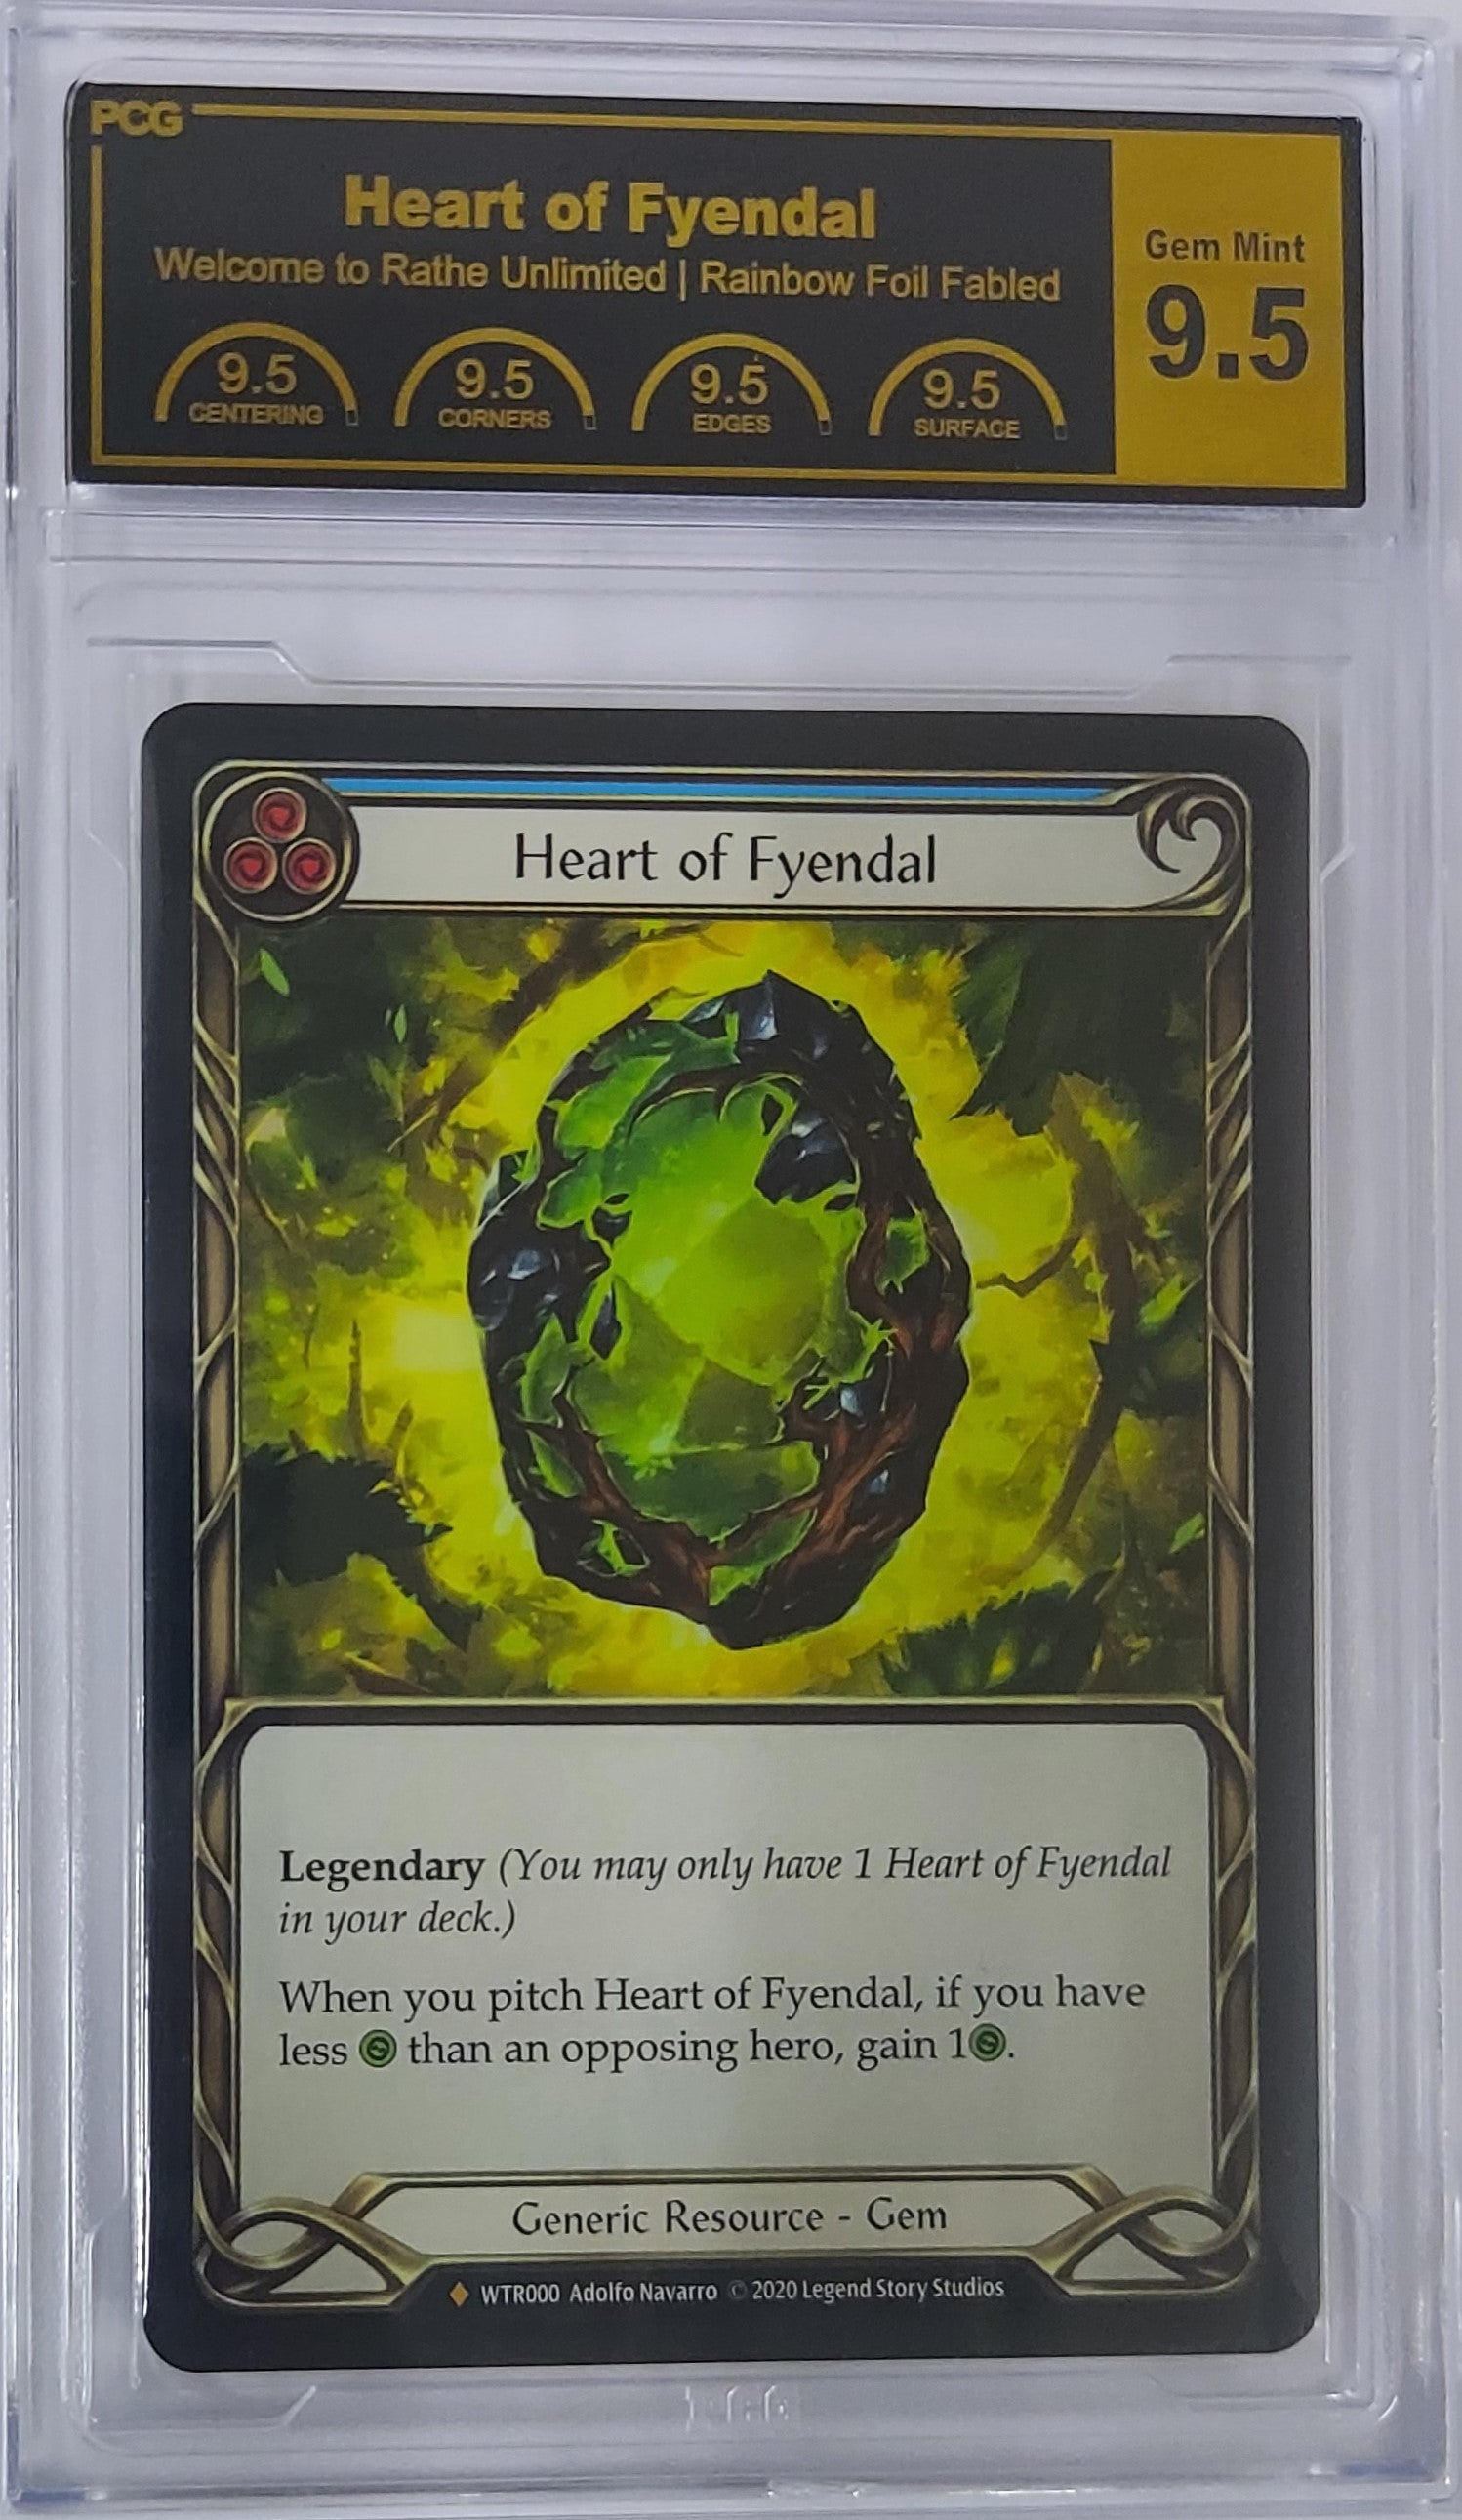 [PCG 9.5] Heart of Fyendal - UL-WTR000